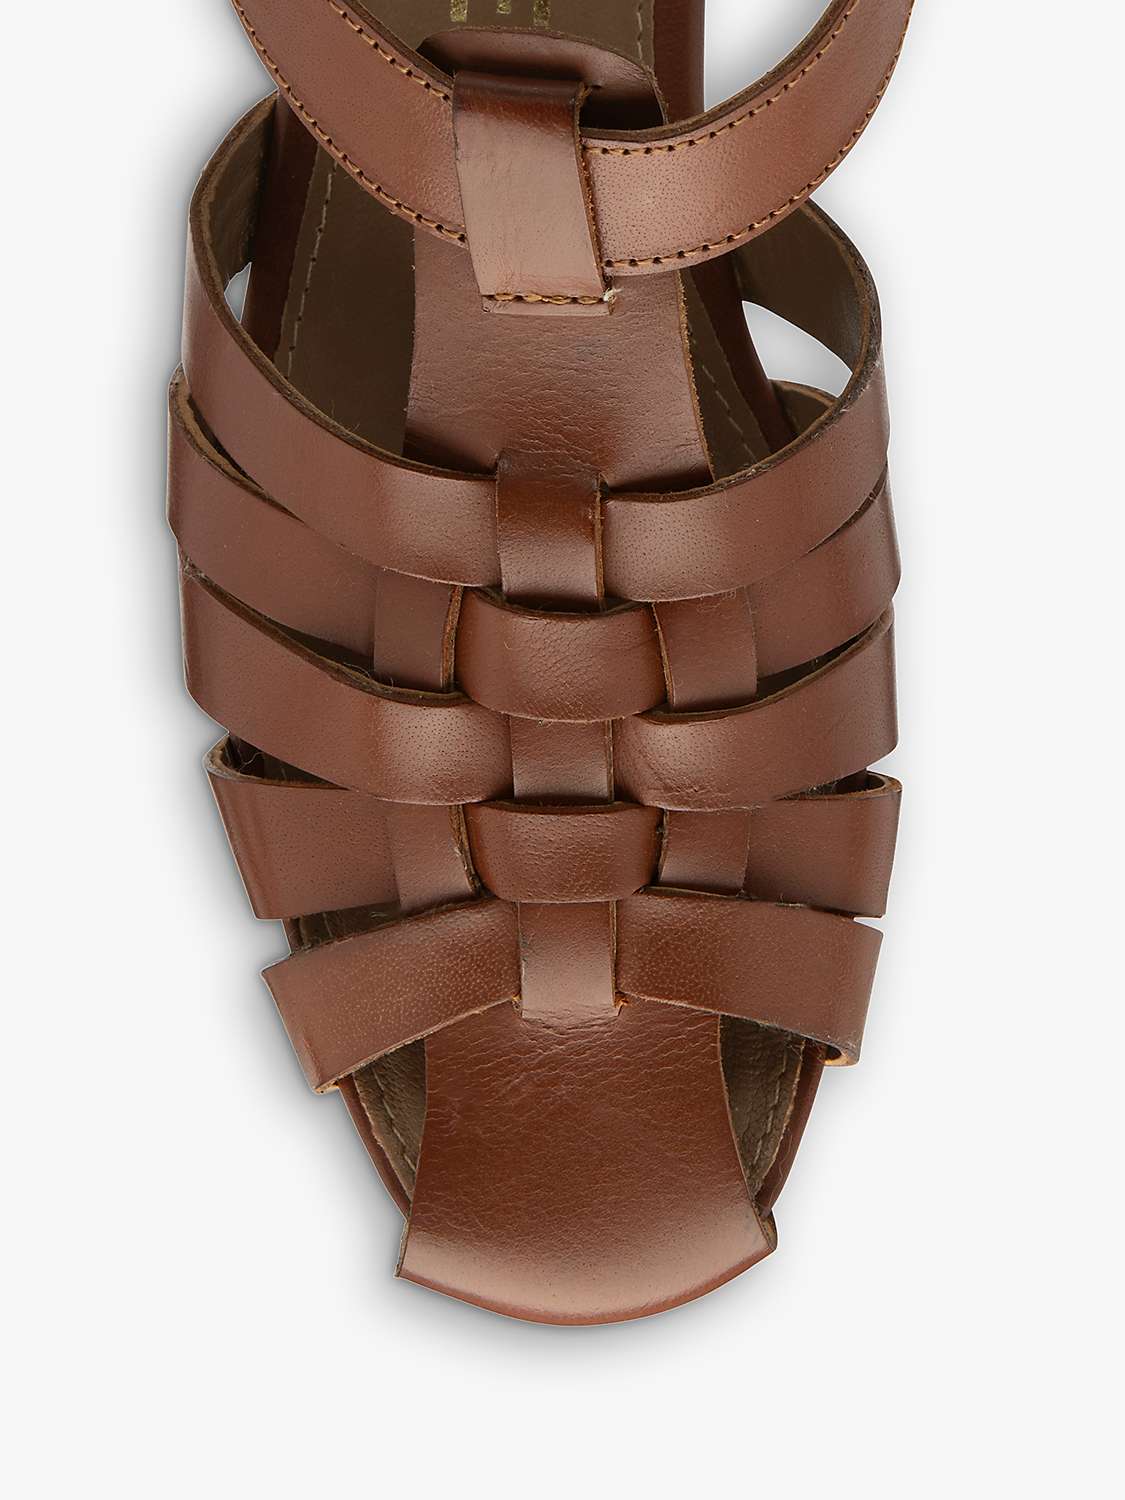 Buy Ravel Galston Leather Flat Sandals Online at johnlewis.com